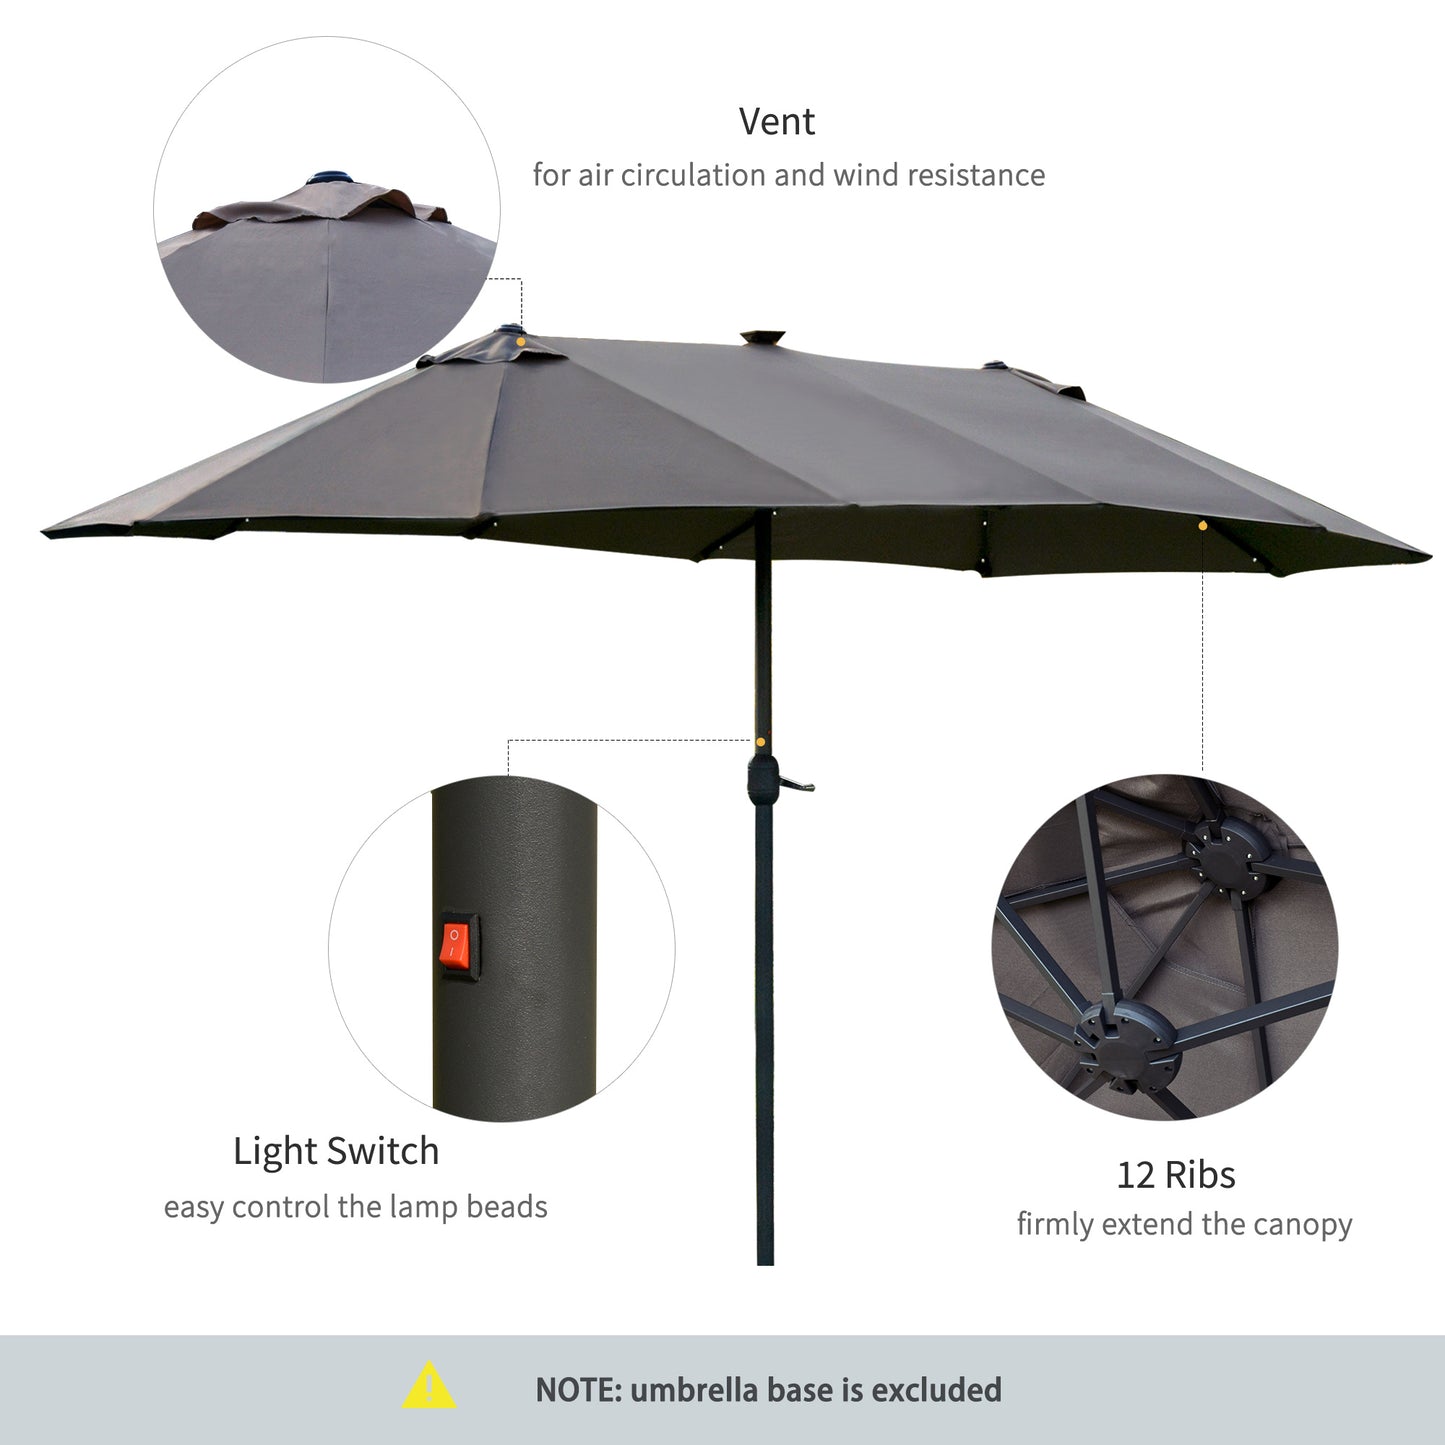 Outsunny 4.4m Double-Sided Sun Umbrella Patio Parasol LED Solar Lights Dark Grey